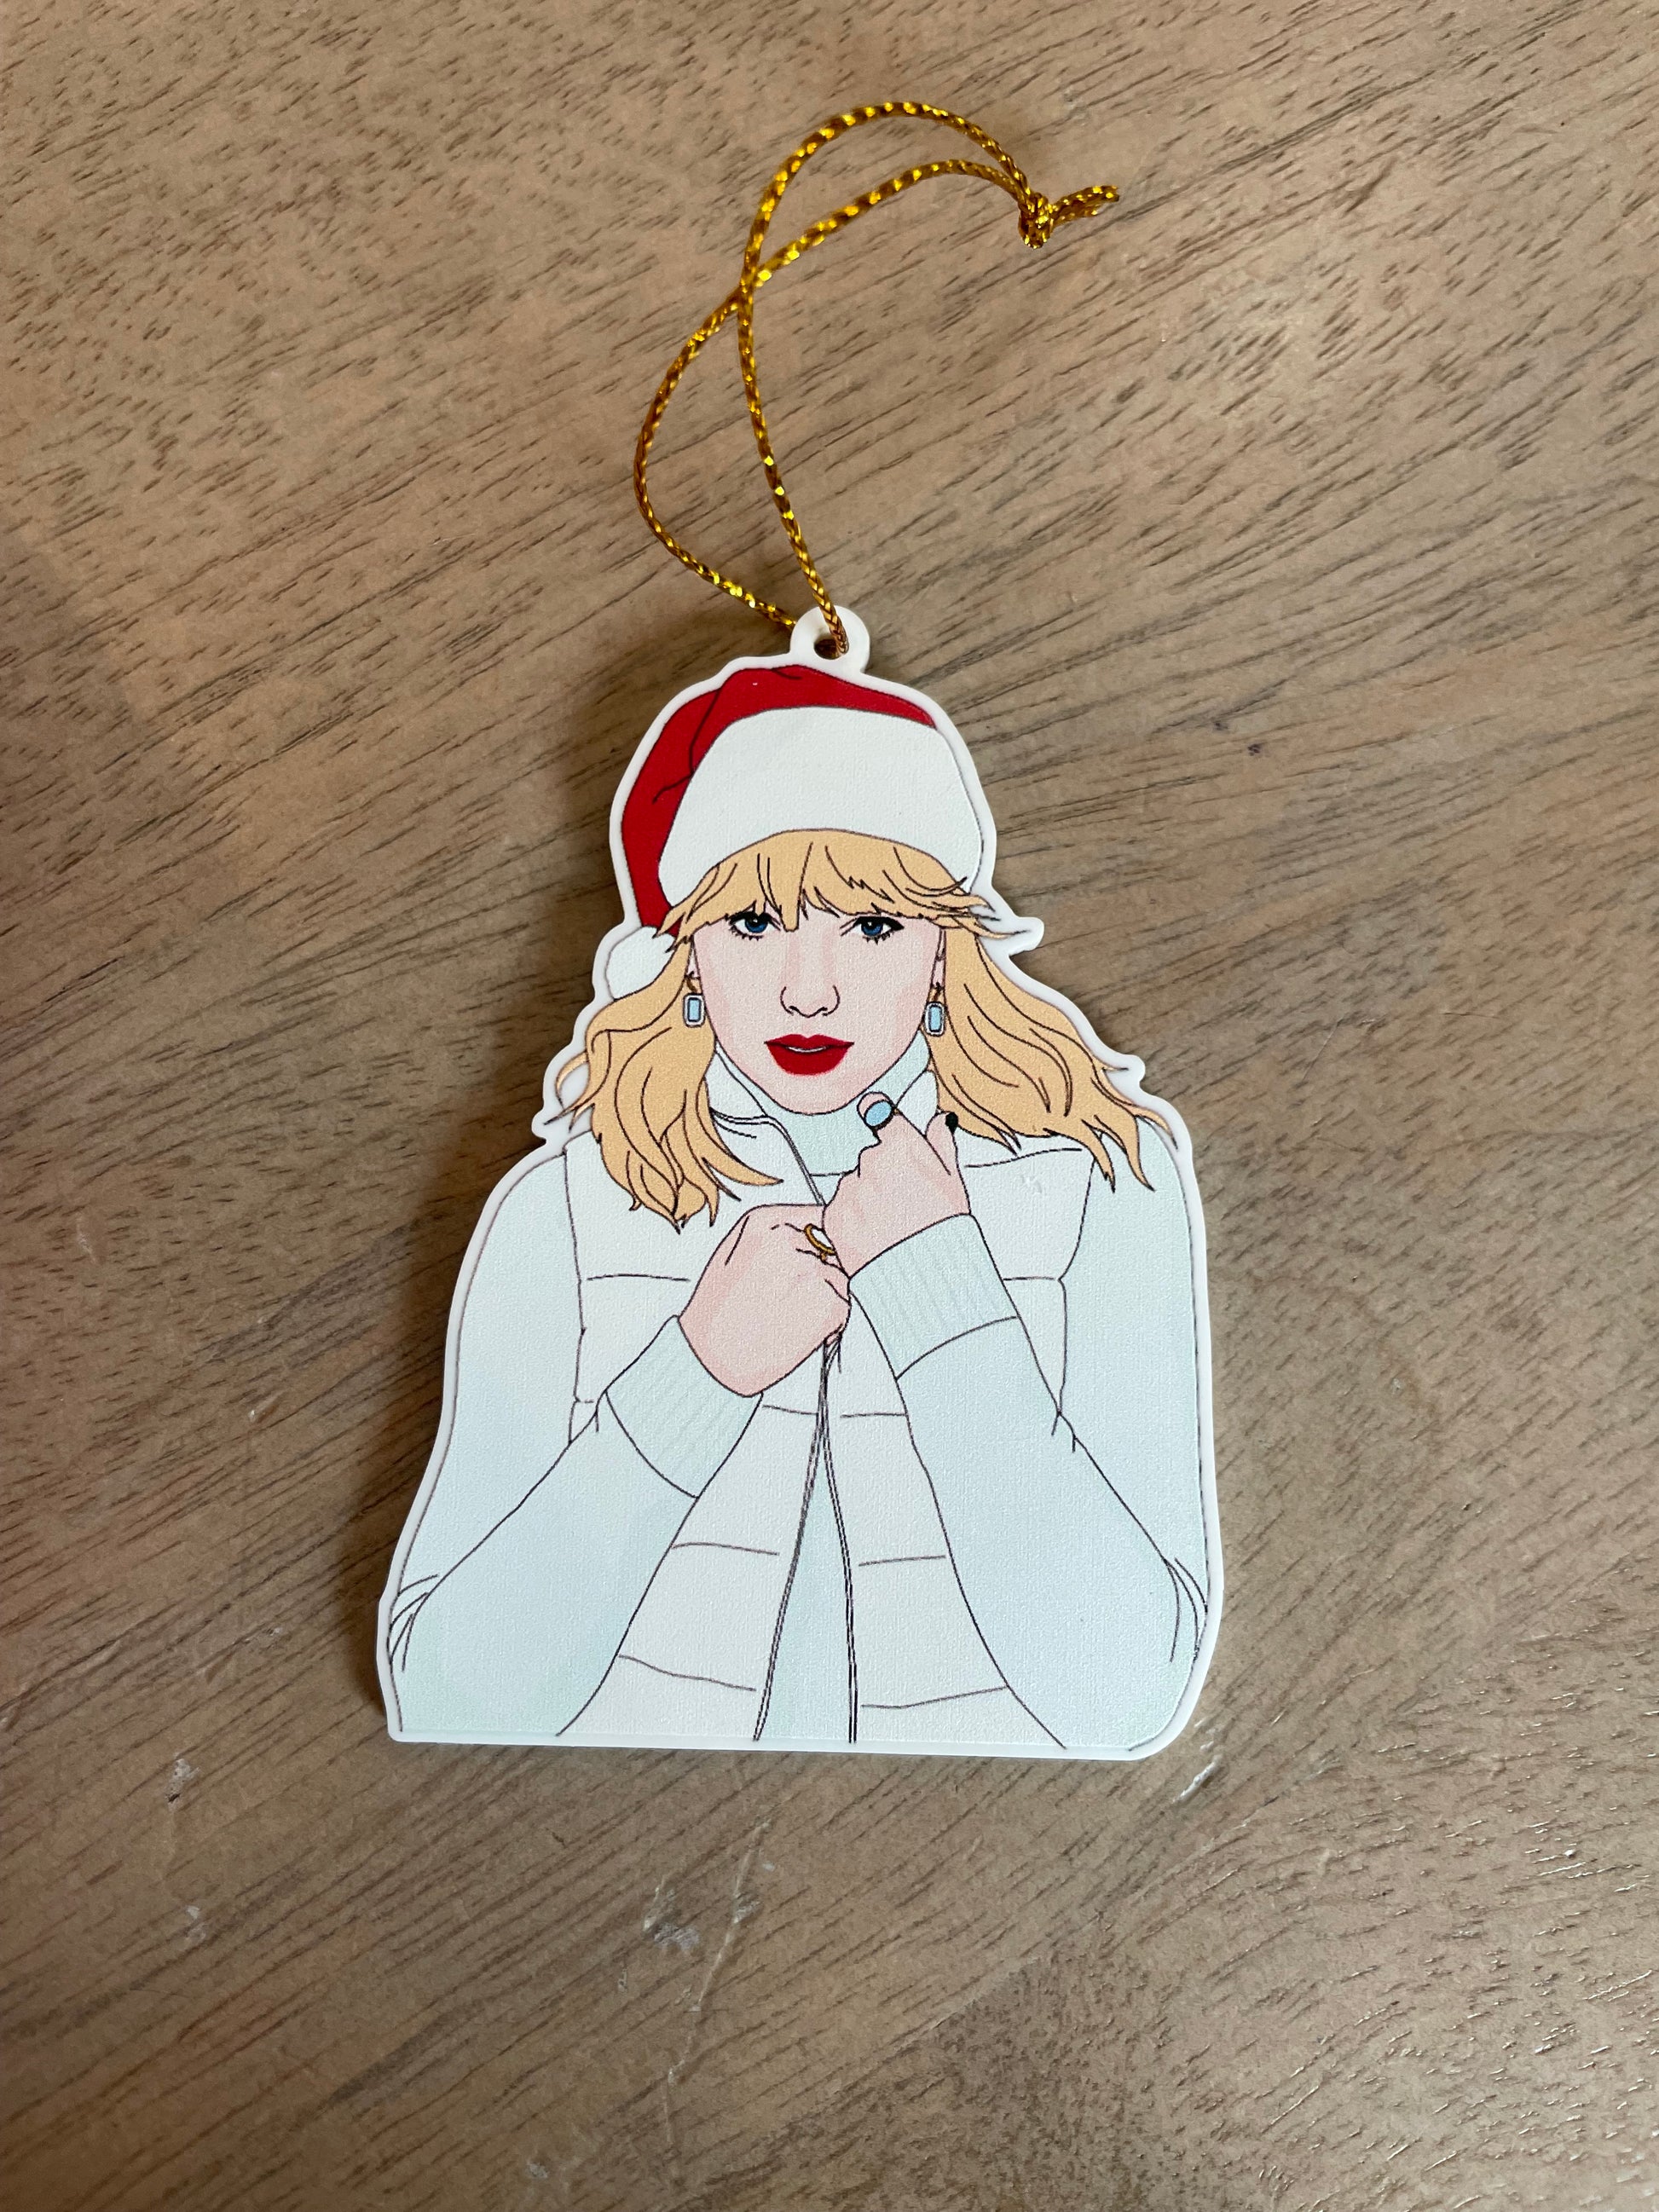 Tis the Damn Season Taylor Swift Ornament – Middleton Vermont